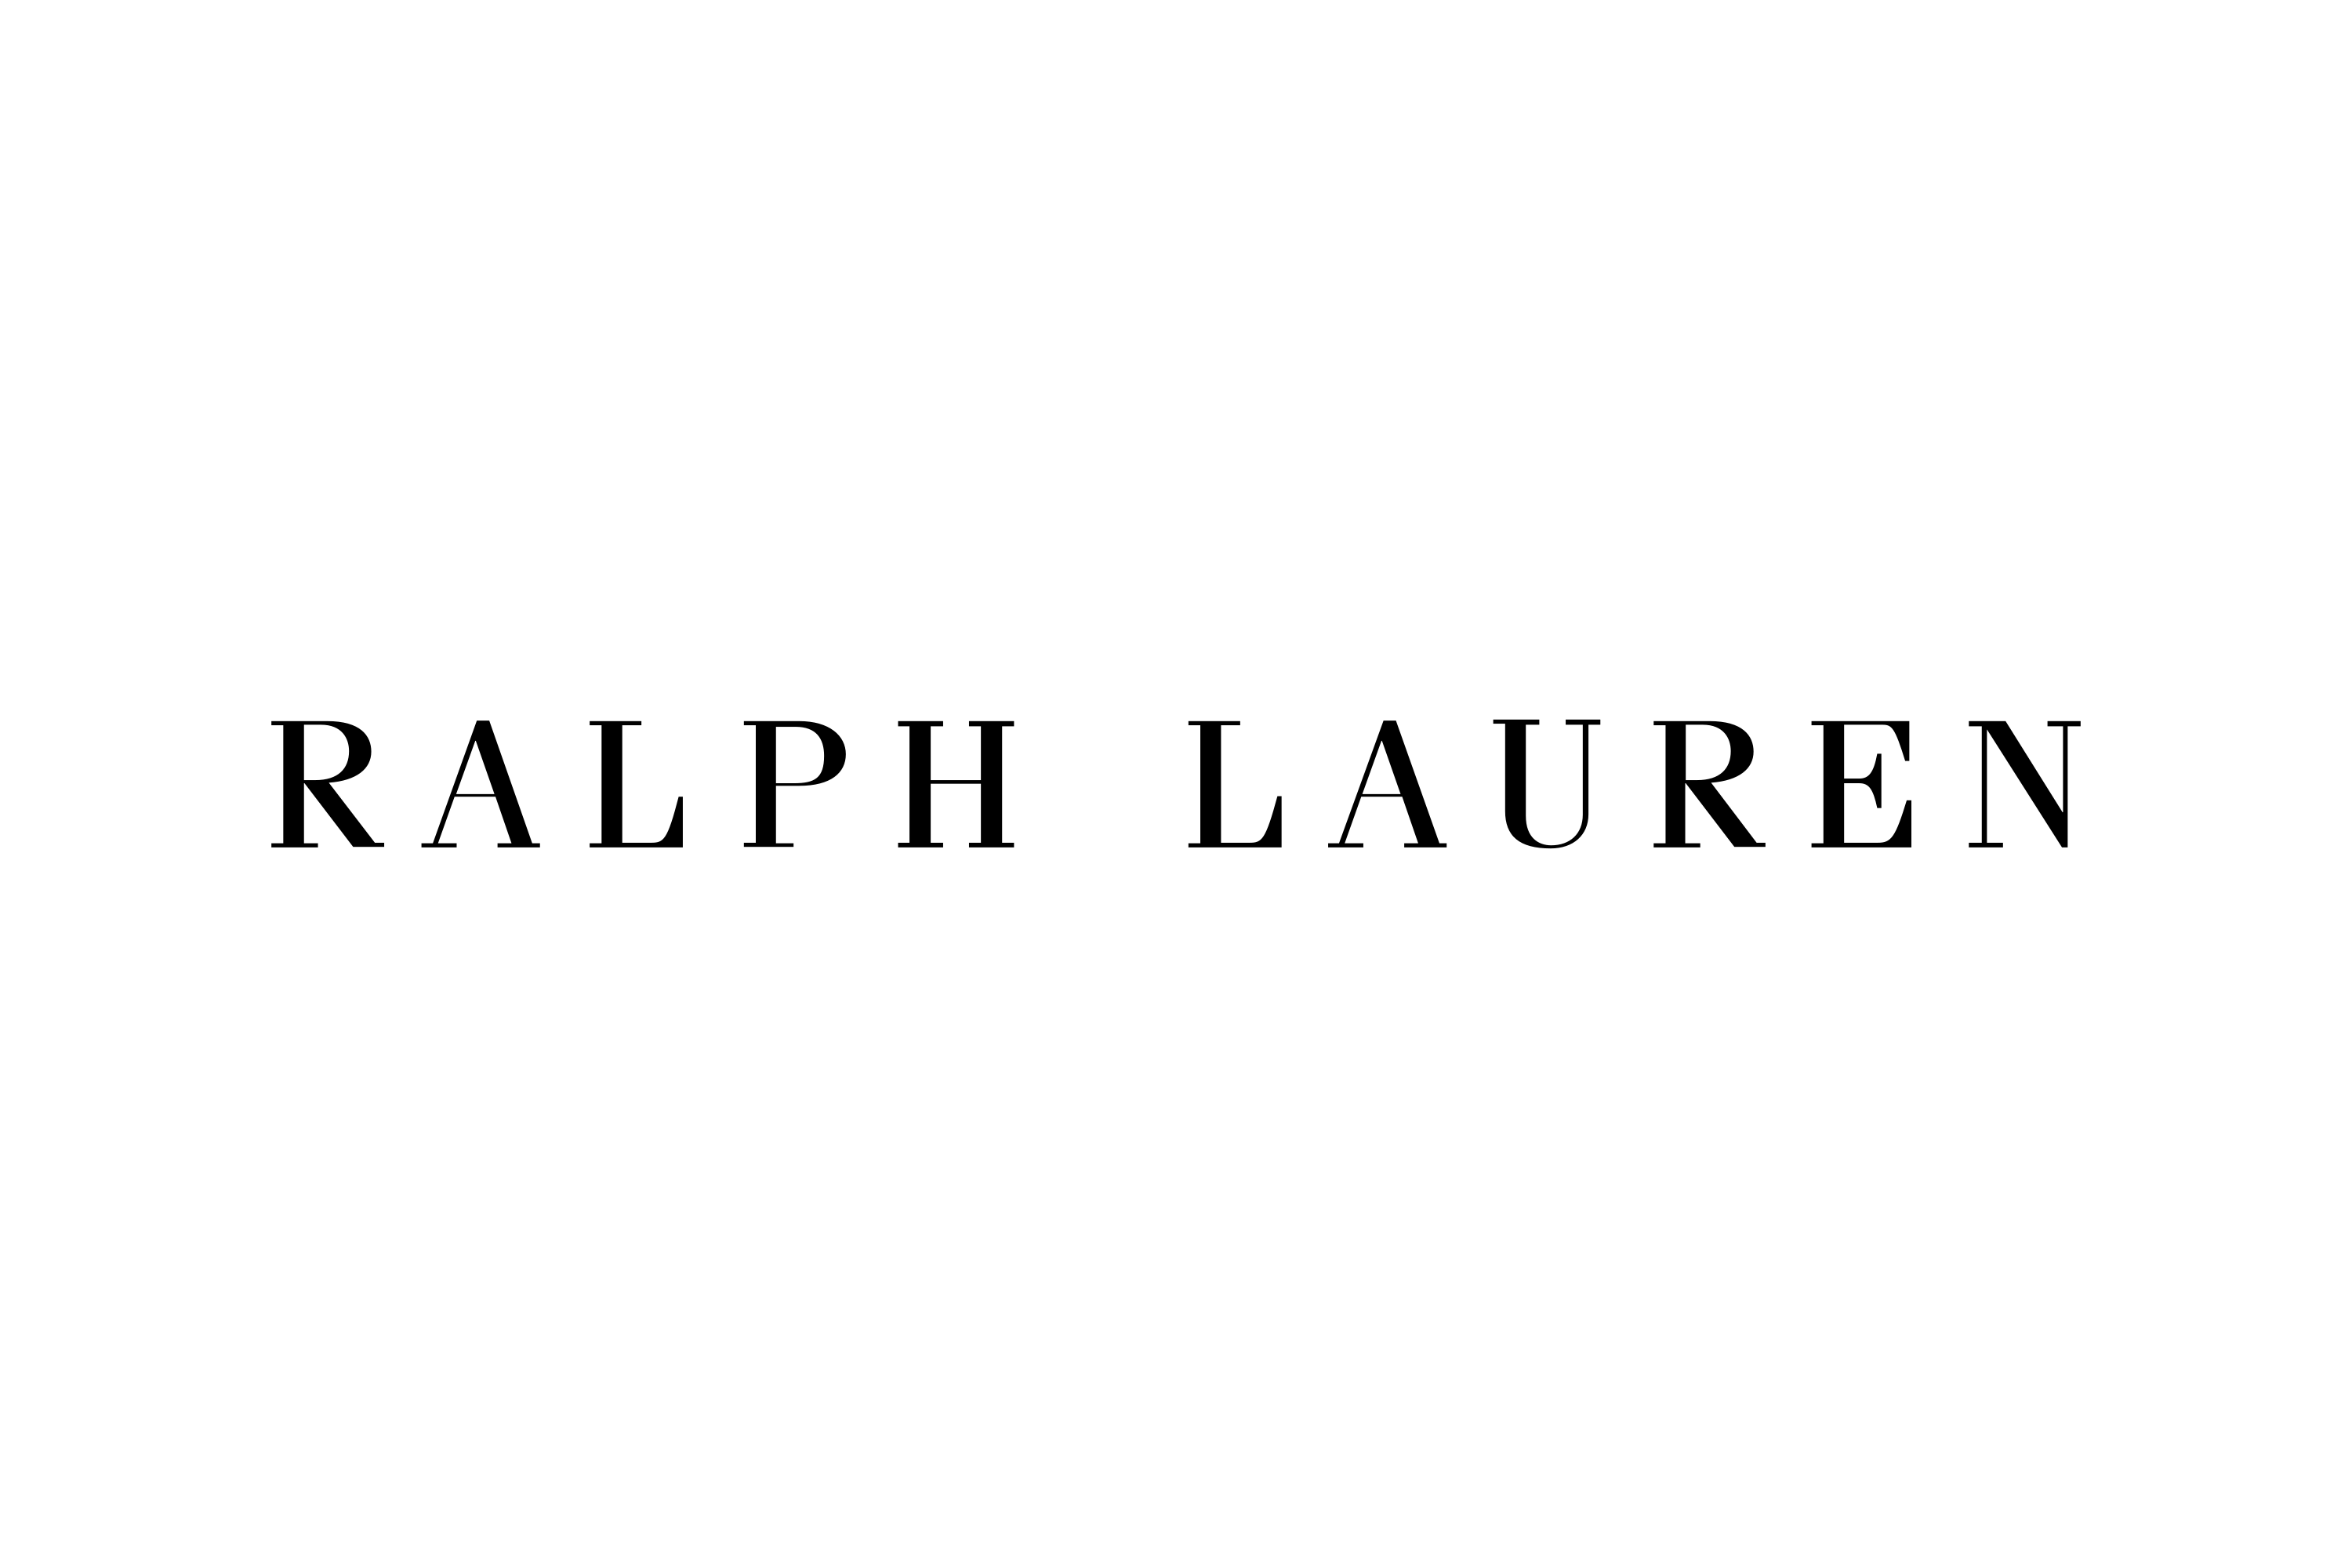 Download Ralph Lauren Corporation Logo in SVG Vector or PNG File Format -  